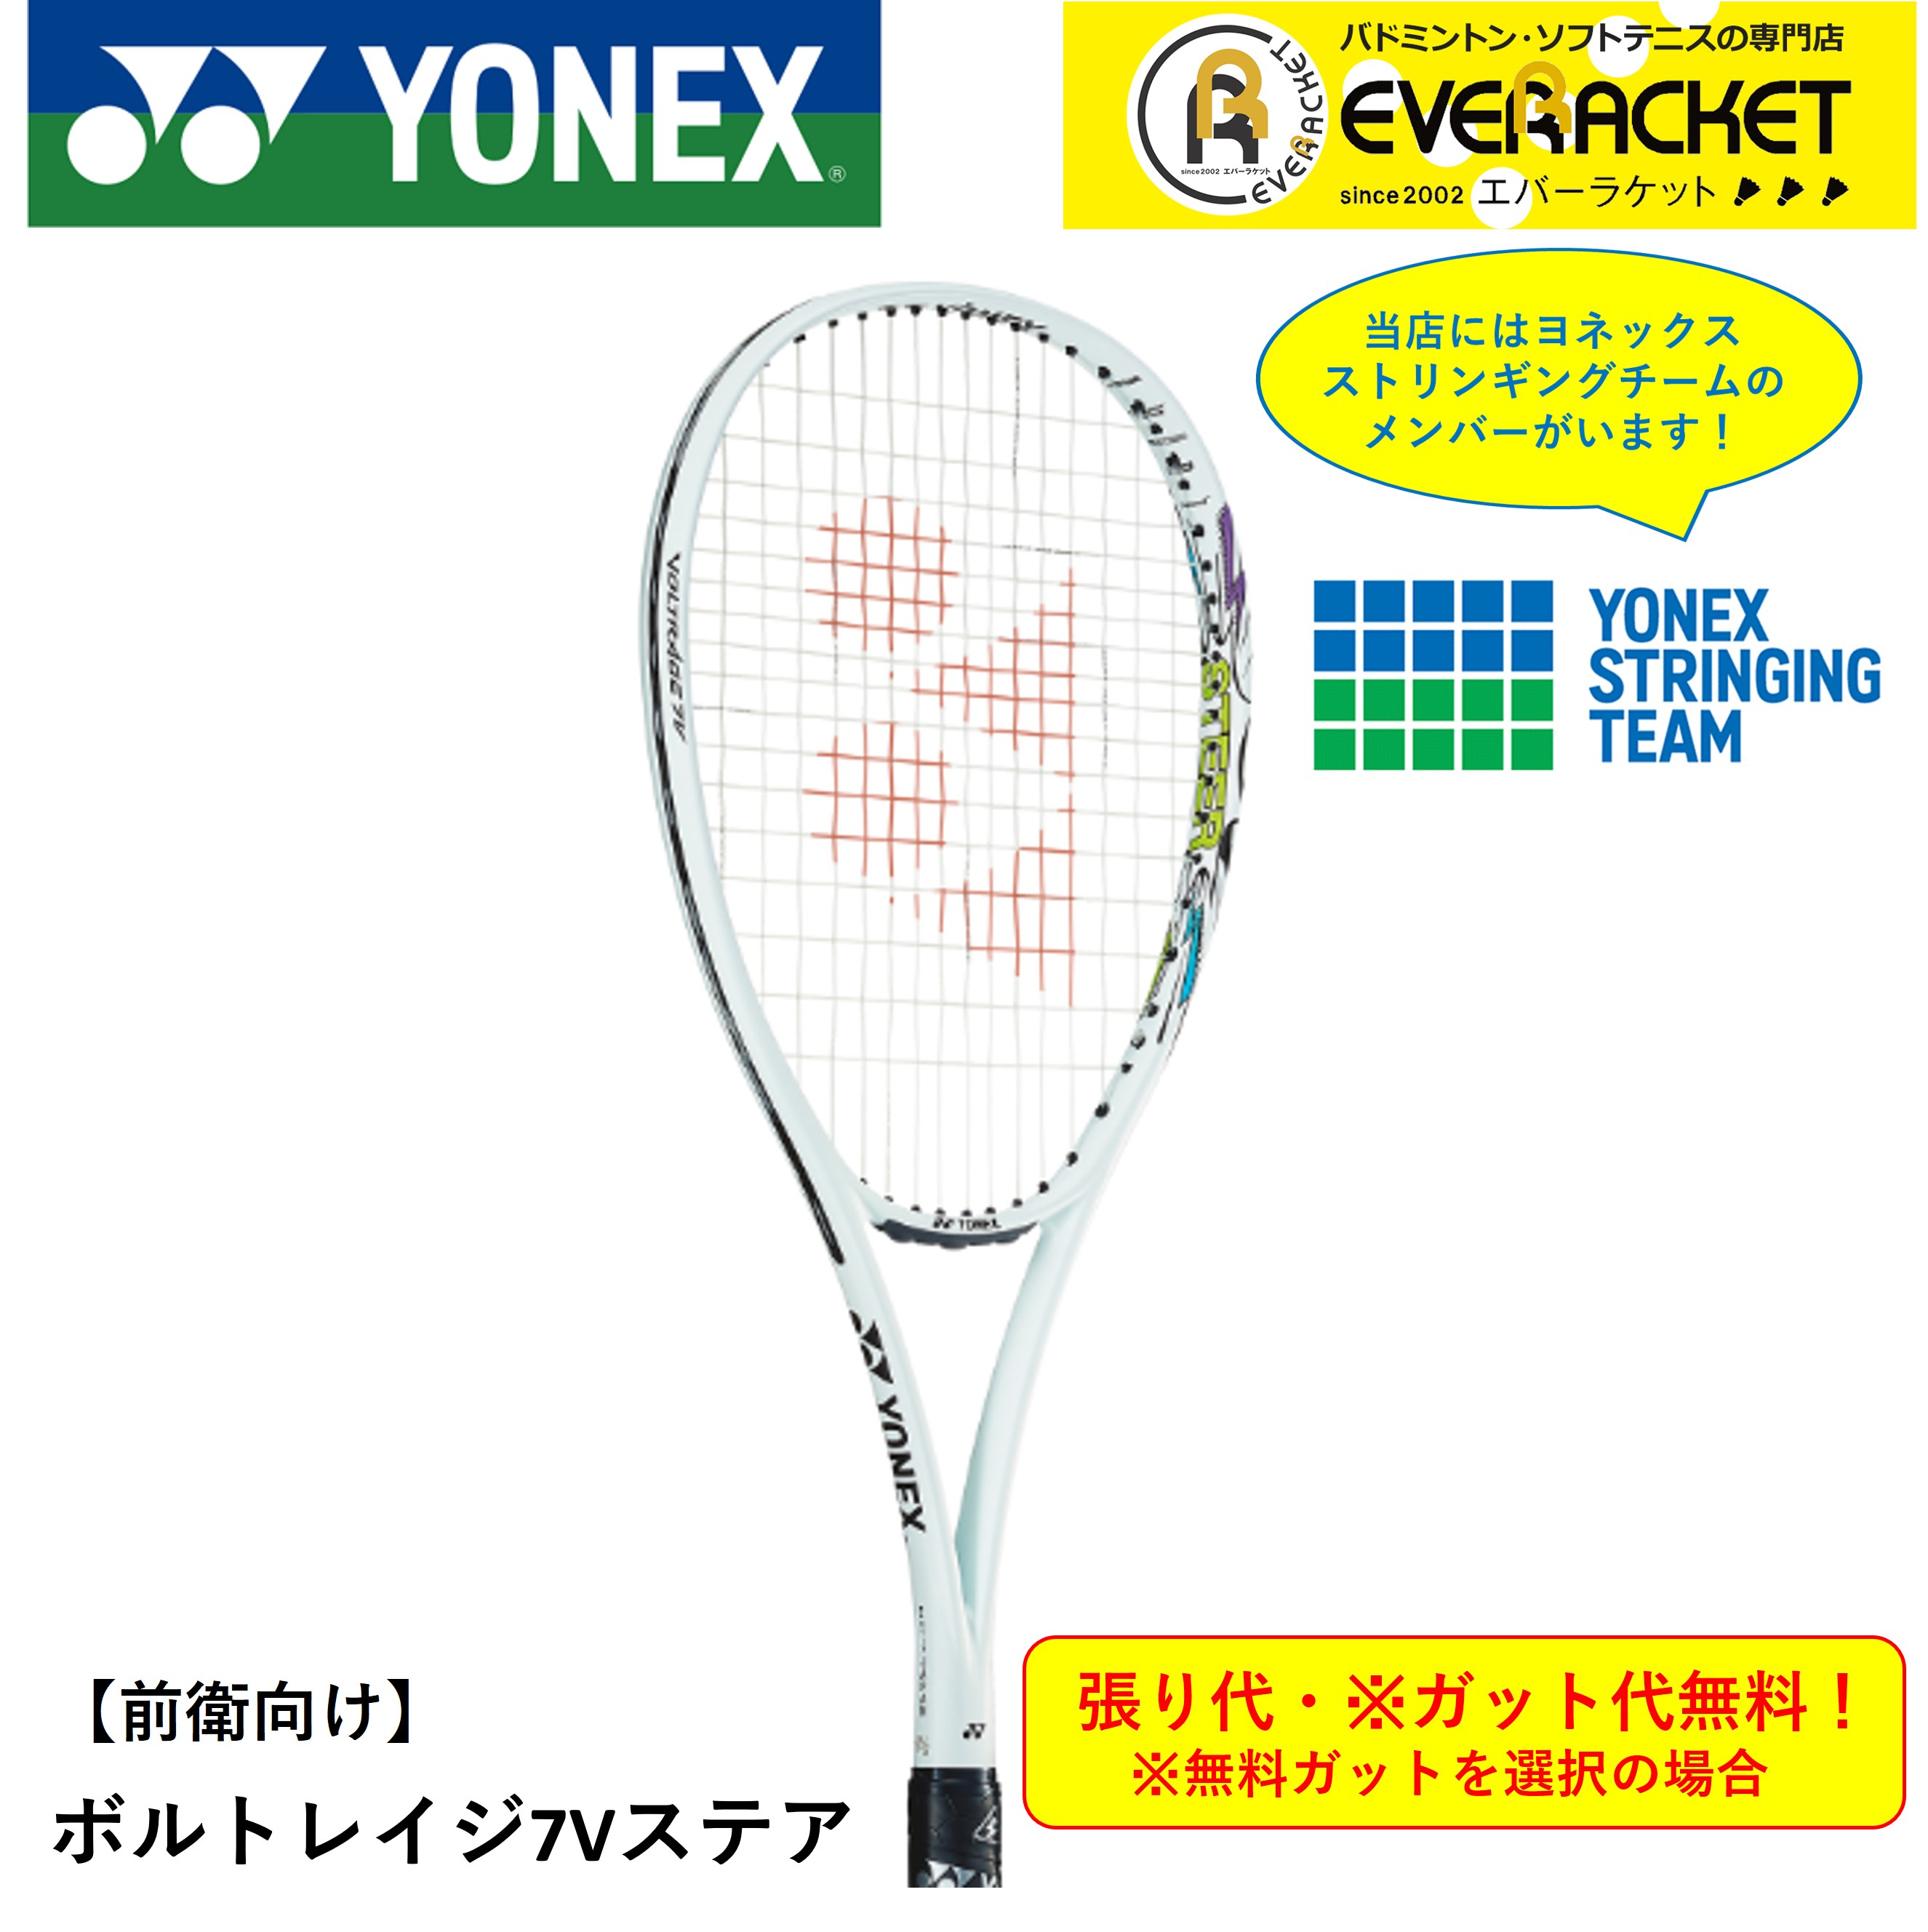 YONEX ヨネックス ソフトテニスラケット ボルトレイジ7Vステア VR7V-S